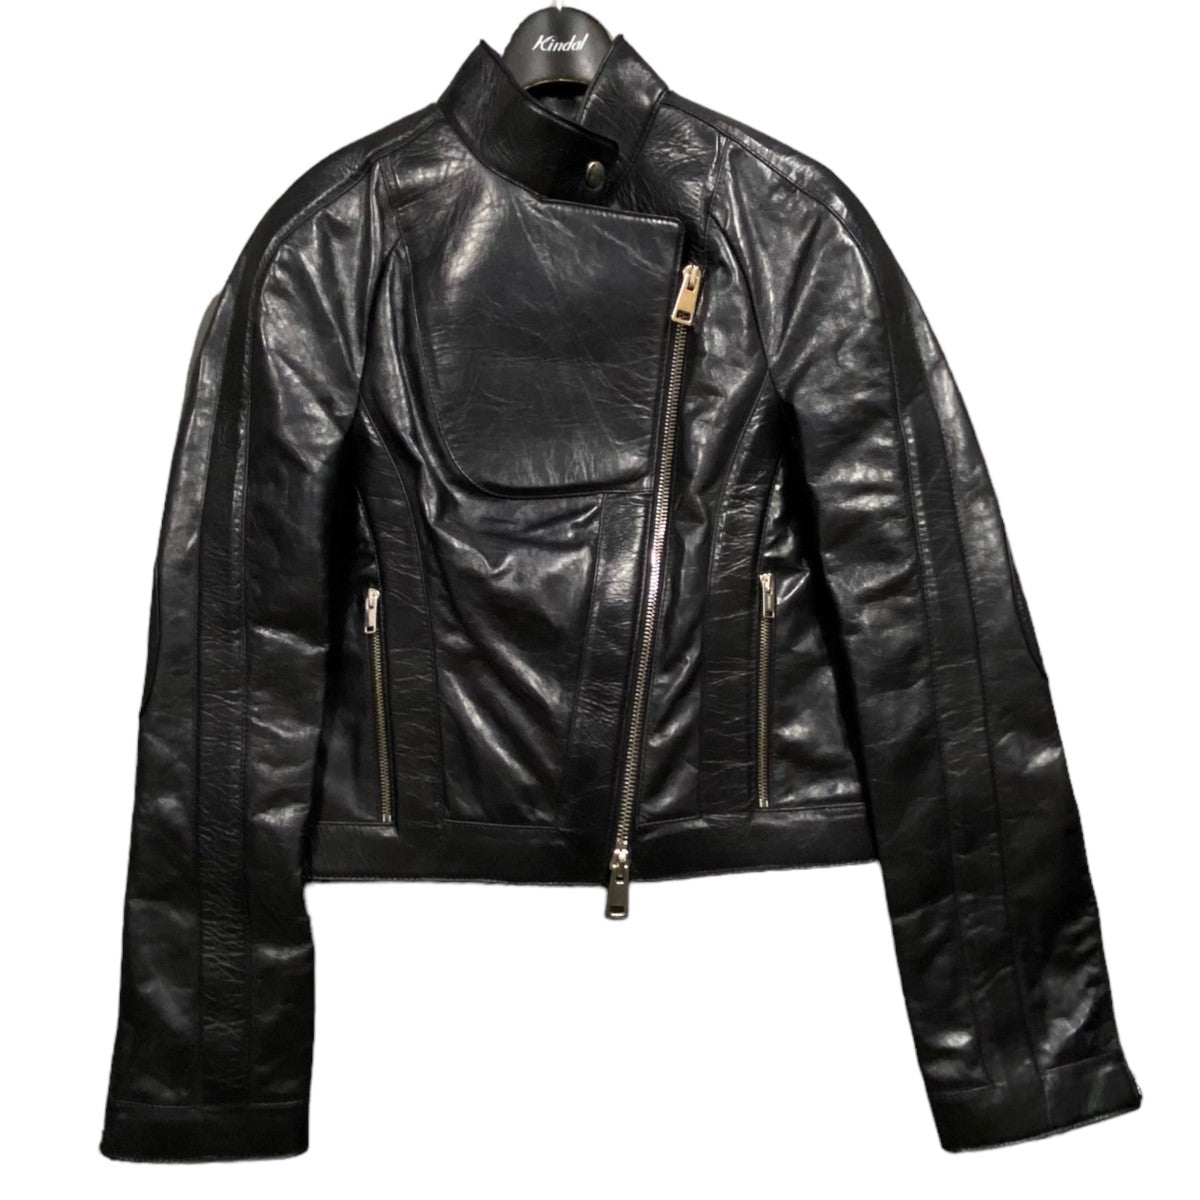 PETER DO(ピータードゥ) 「Biker jacket」バイカージャケット